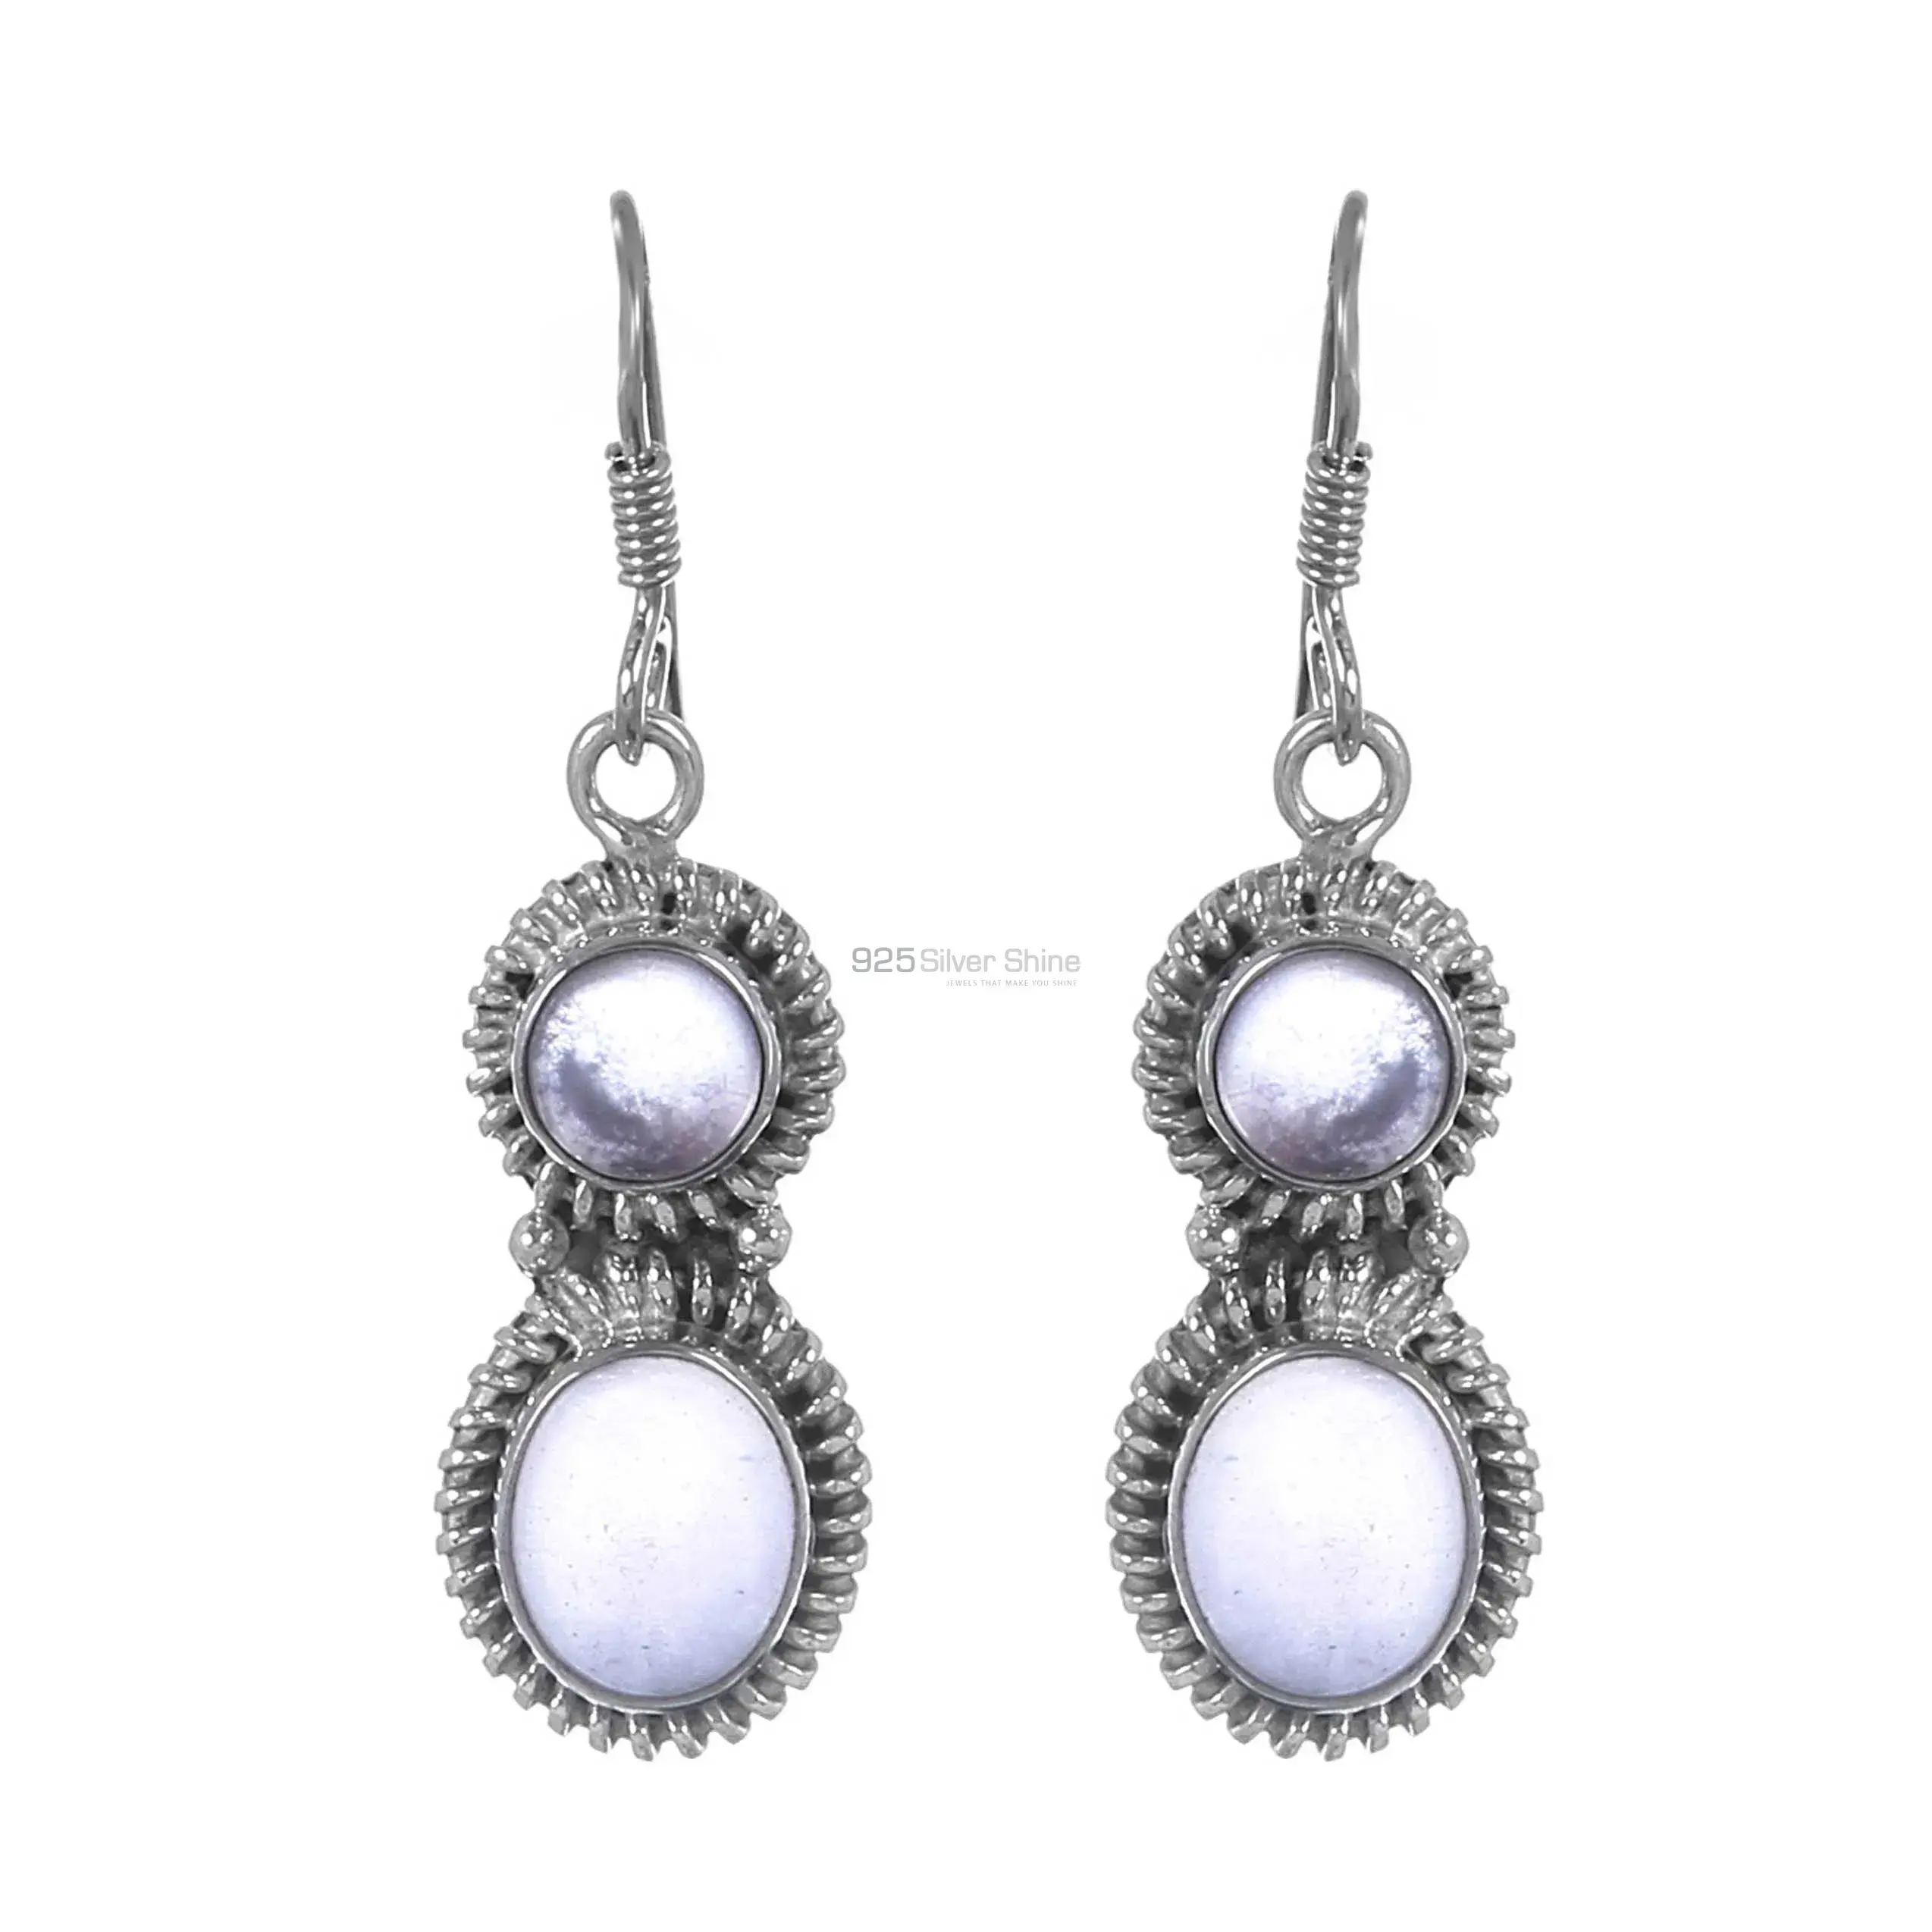 Beautiful 925 Sterling Silver Handmade Earrings Manufacturer In Rose Quartz Gemstone Jewelry 925SE283